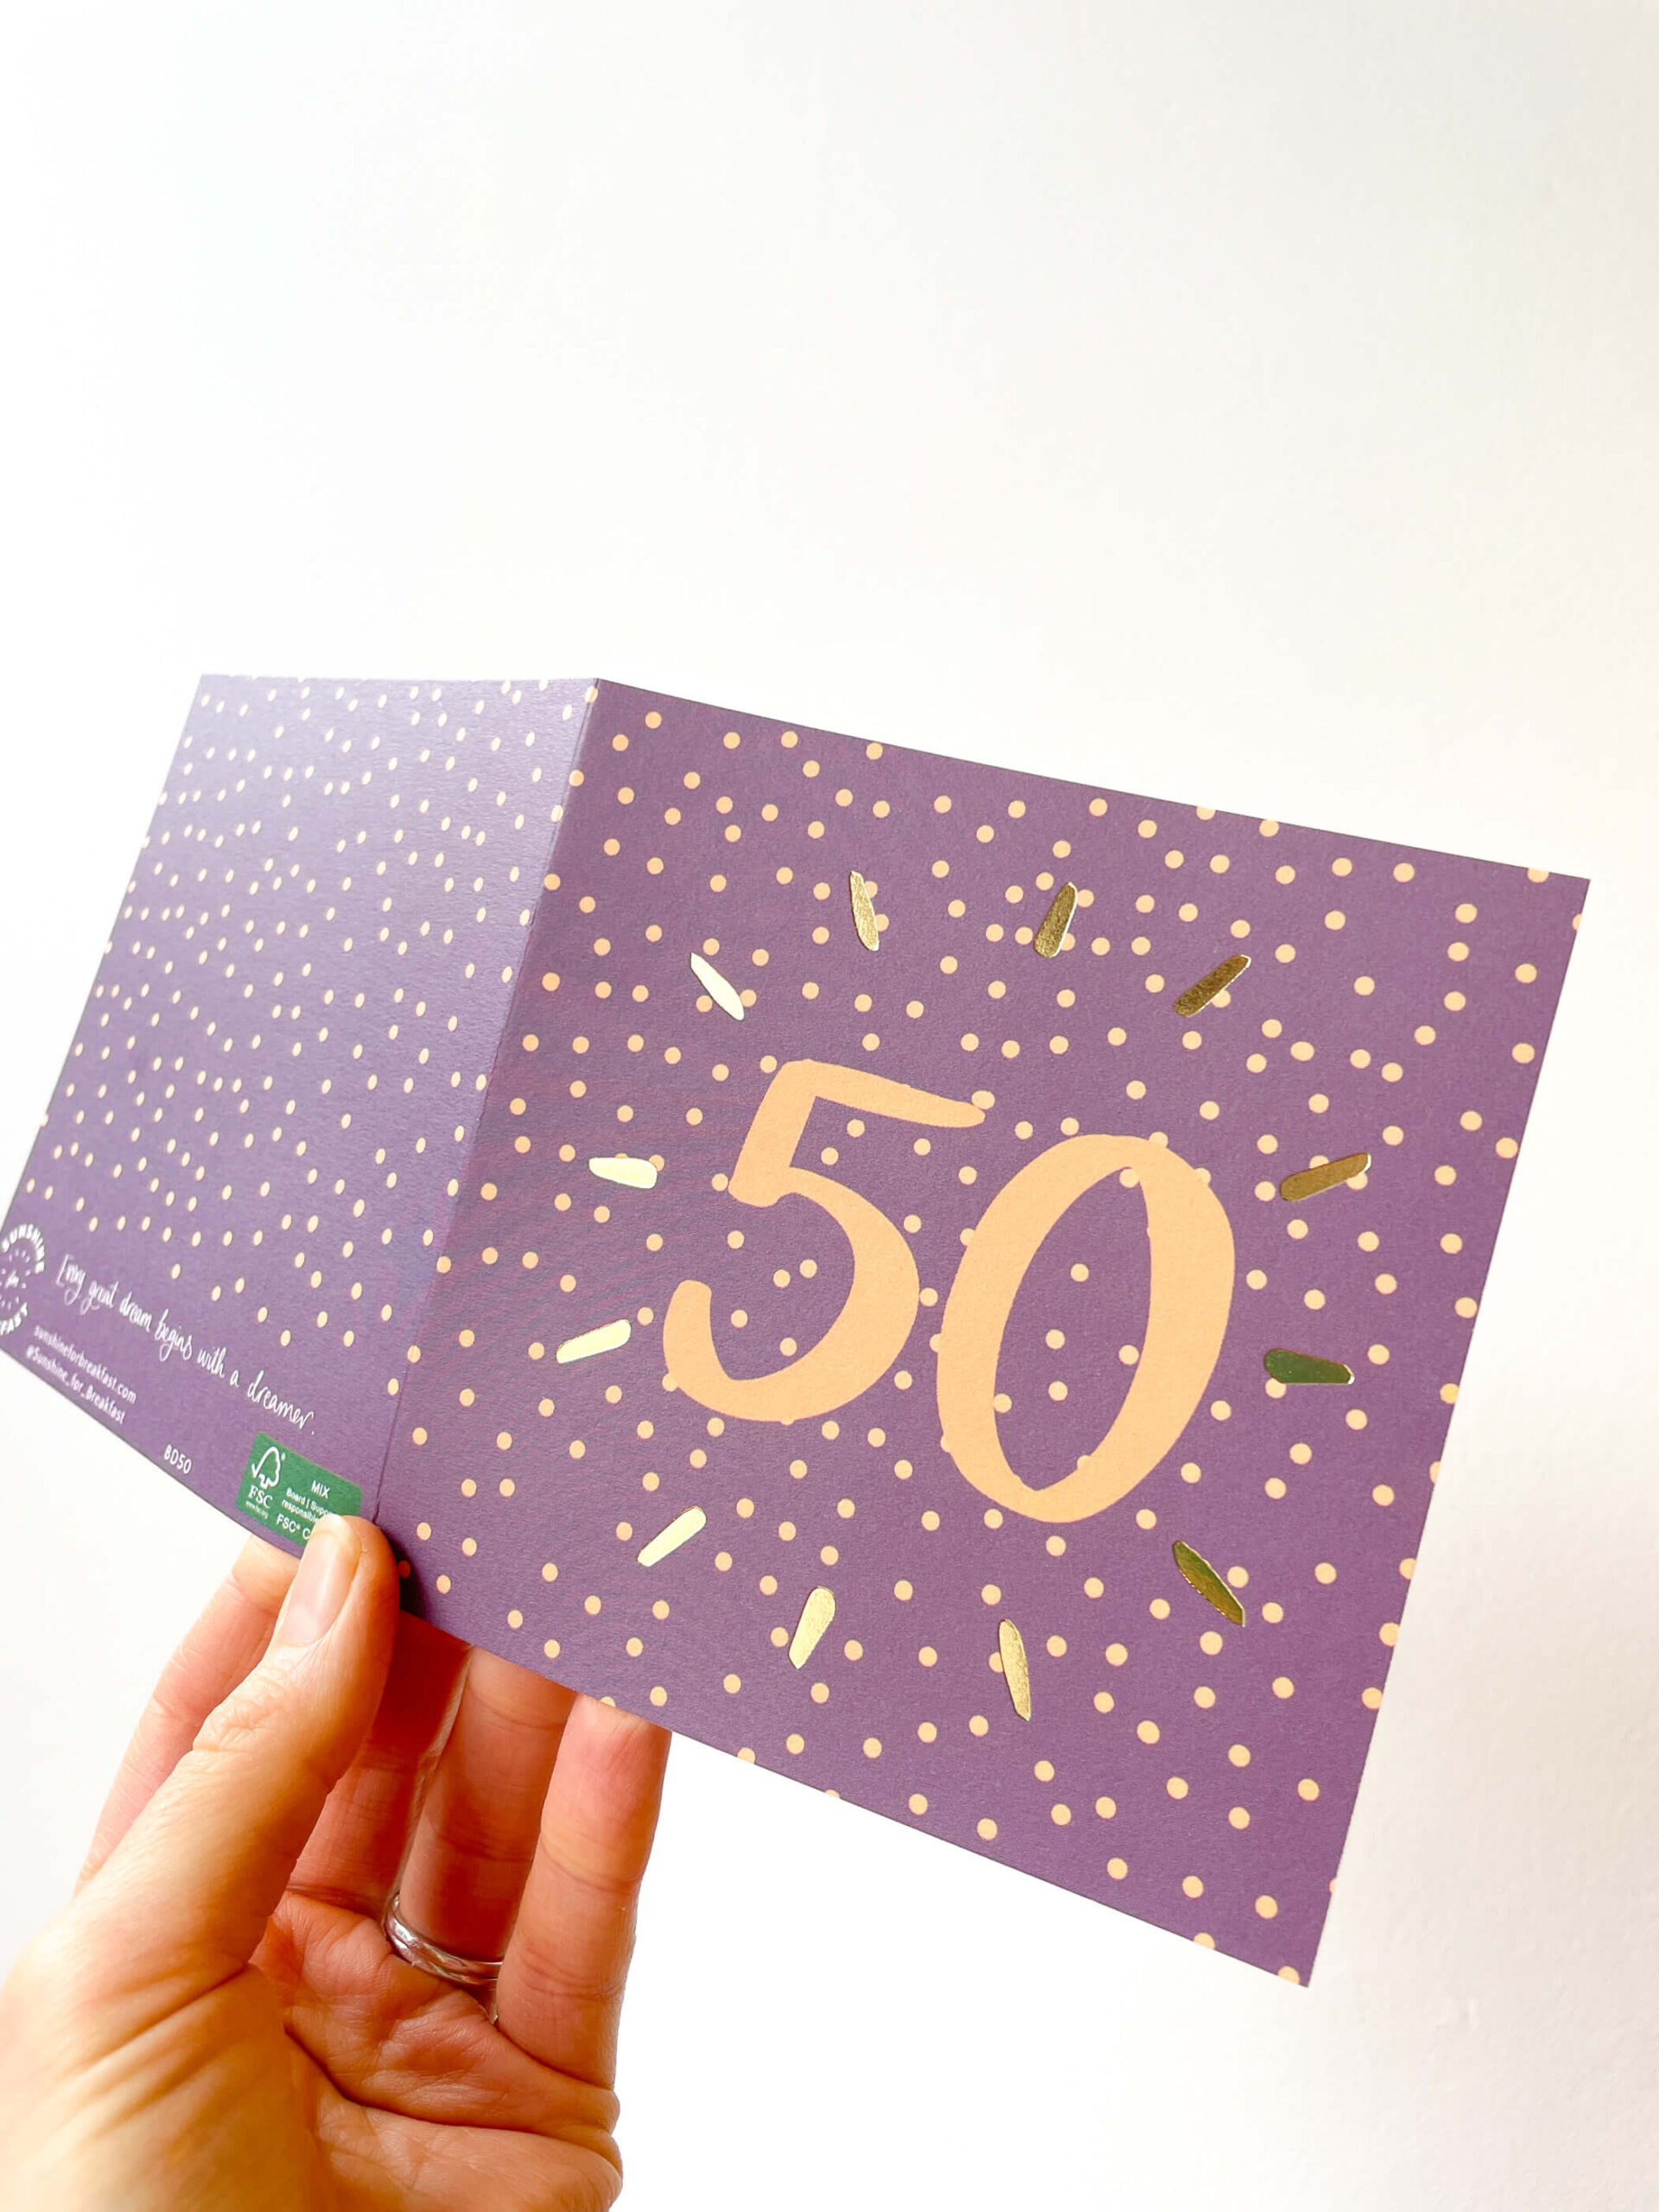 50th birthday card in purple and orange spotty design